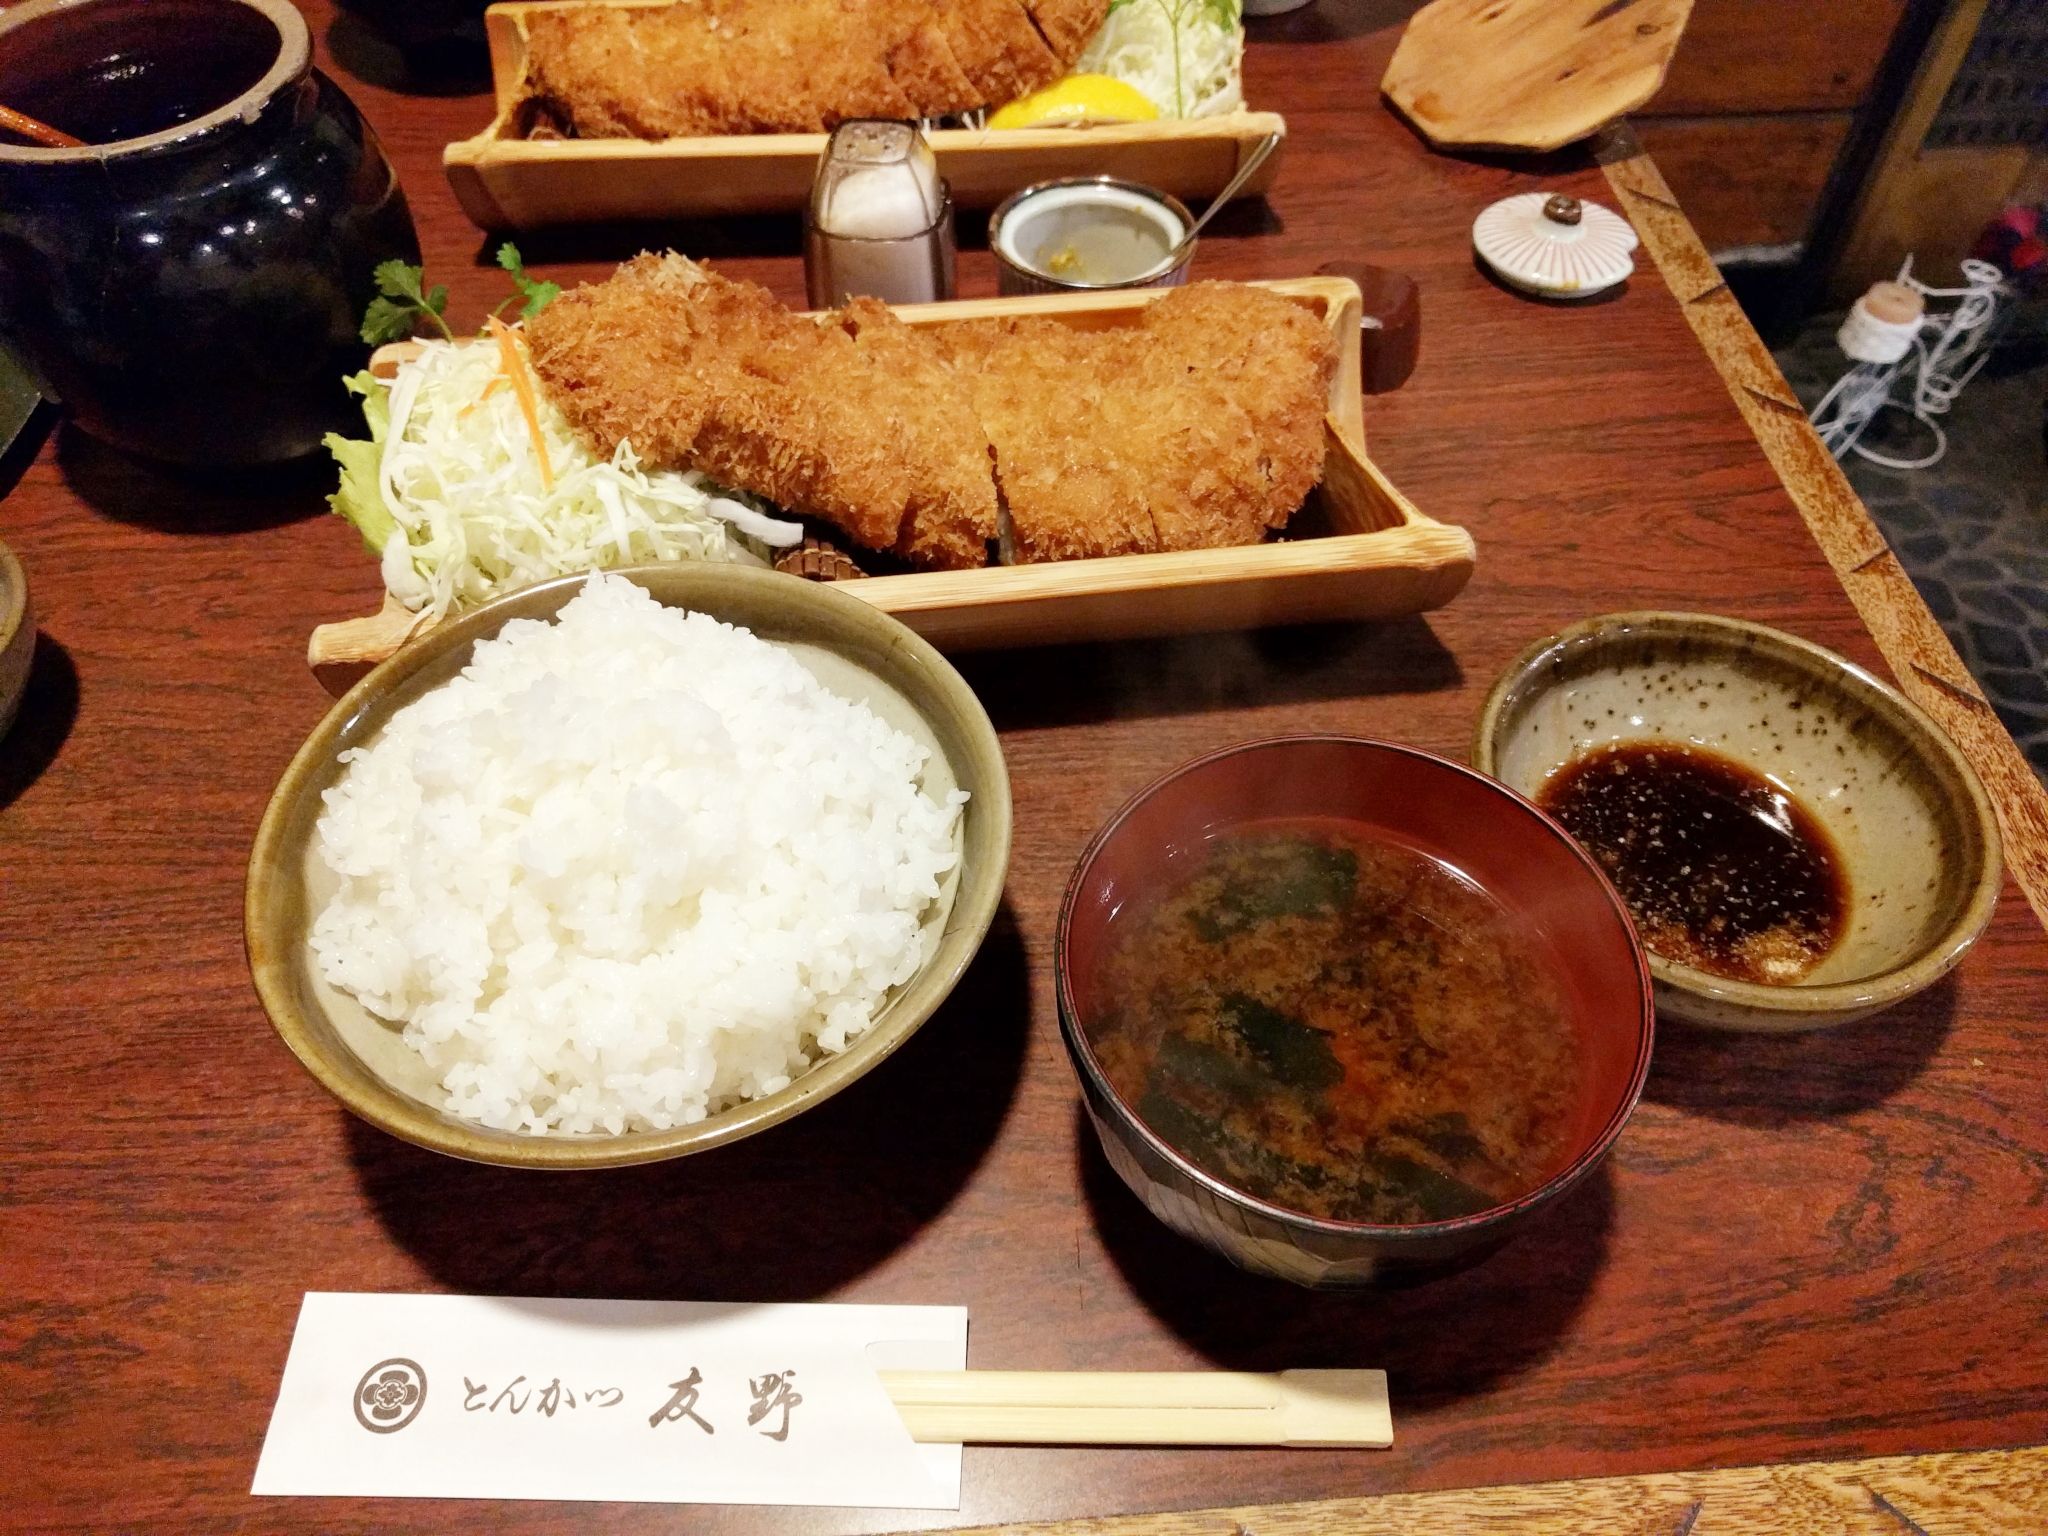 Loin cutlet / Japanese-style set menu meal